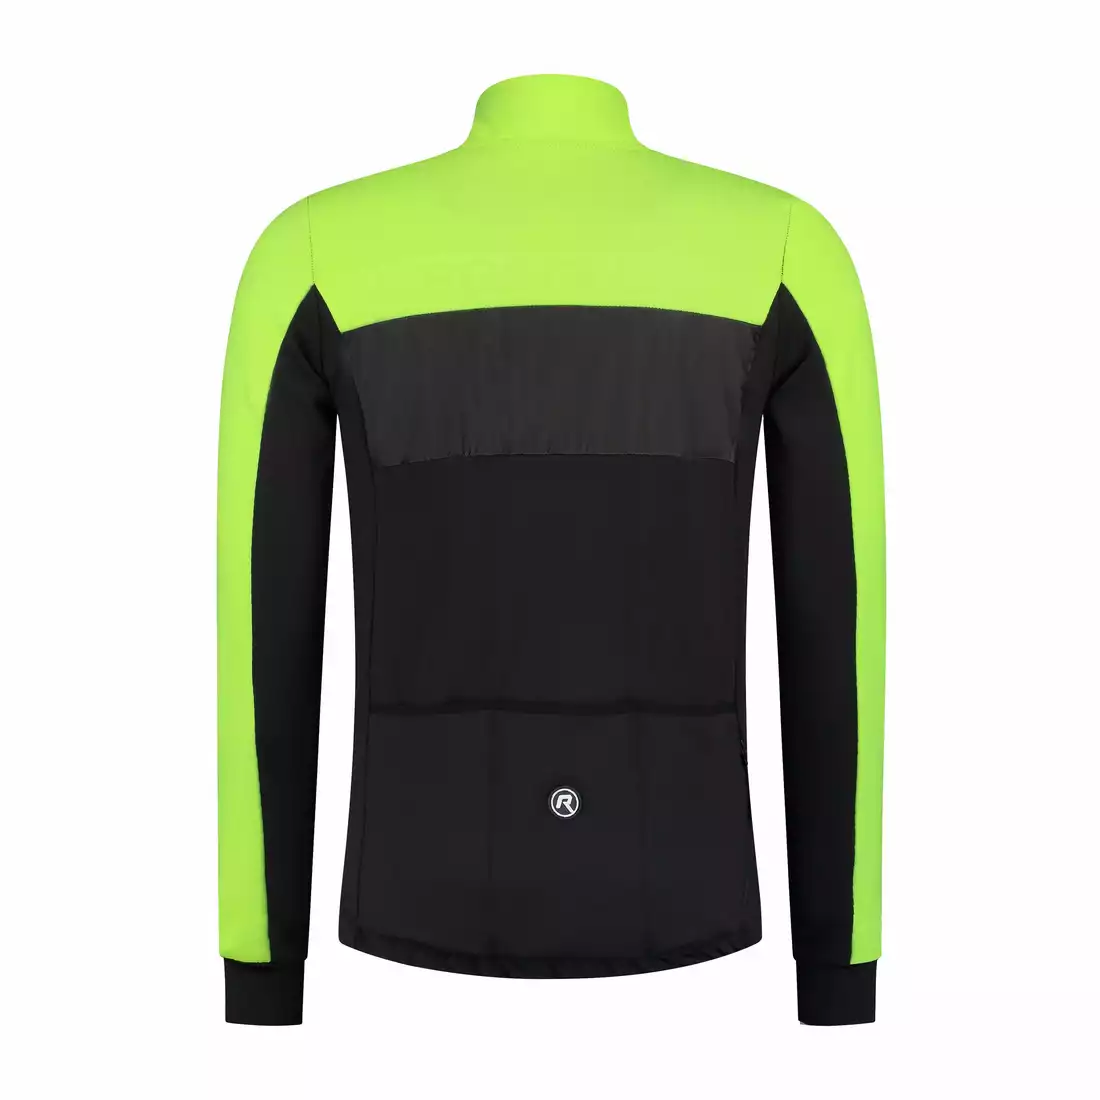 ROGELLI ATTQ men's winter cycling jacket, black and yellow